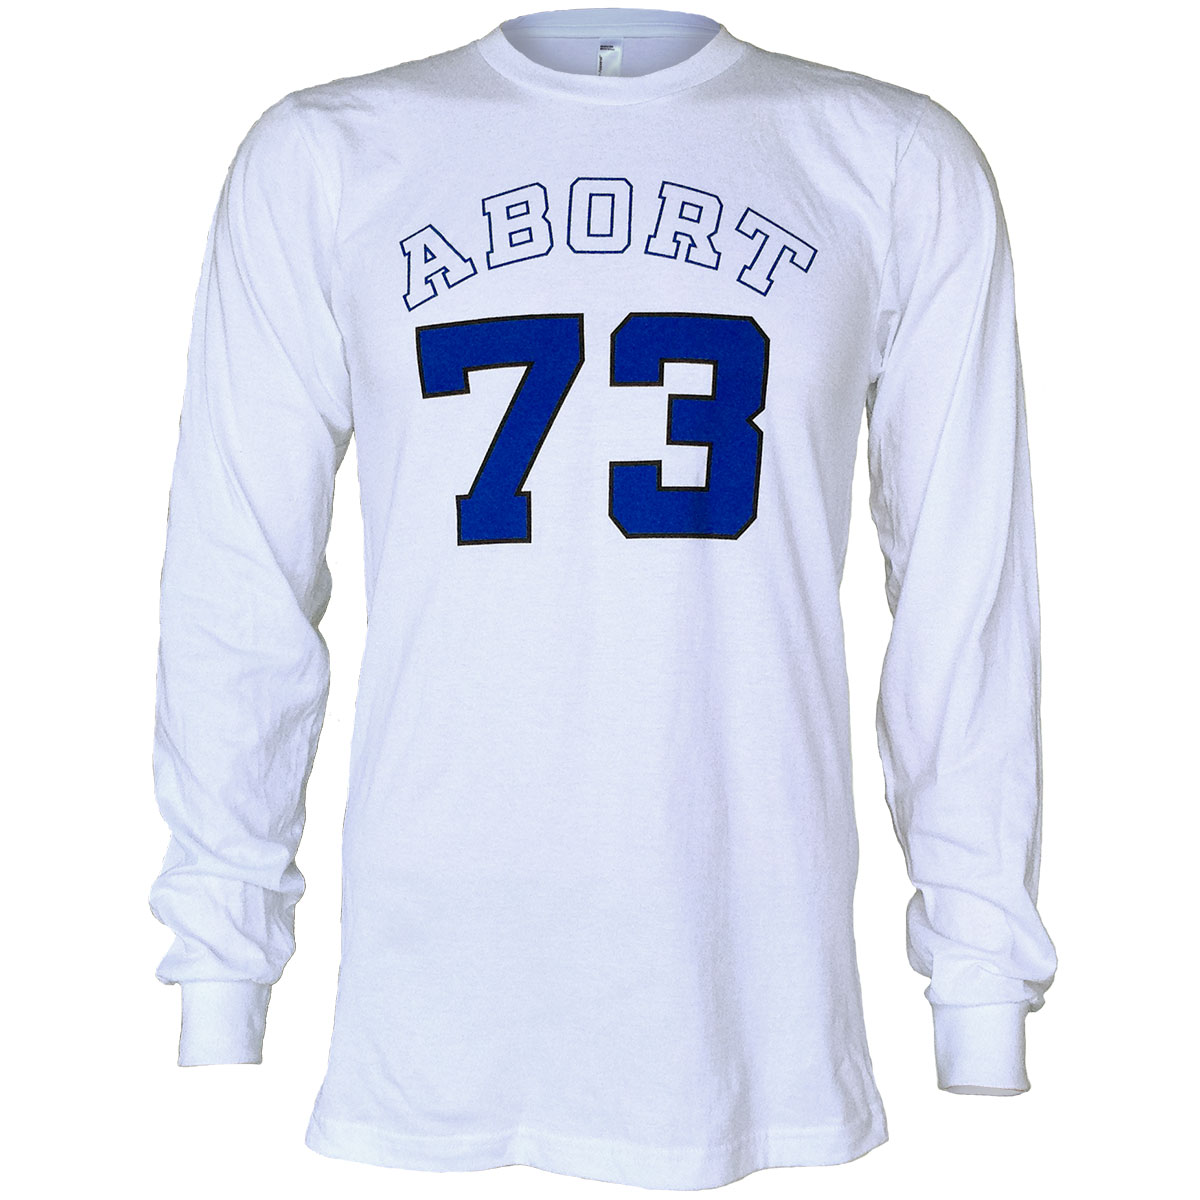 Abort73 (Blue Devils) (Abort73 Unisex Long Sleeve T-shirt)